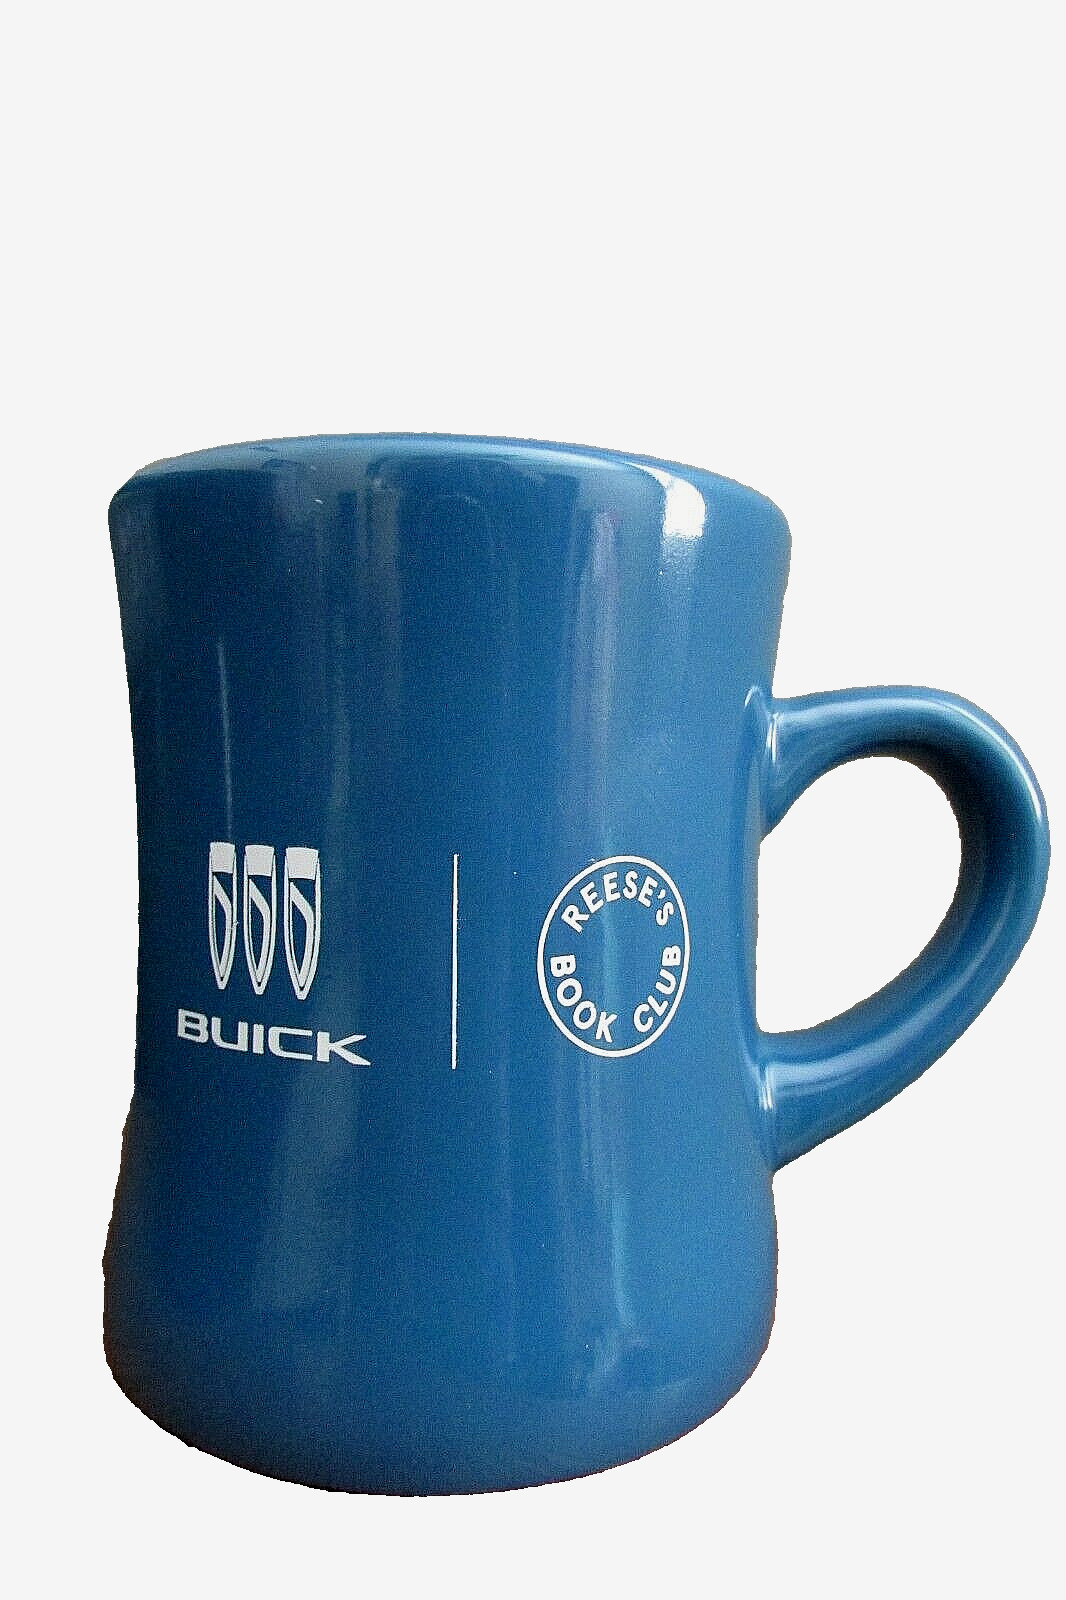 Buick car emblem blue Reese’s Book Club Coffee Mug cup-main character energy-NEW